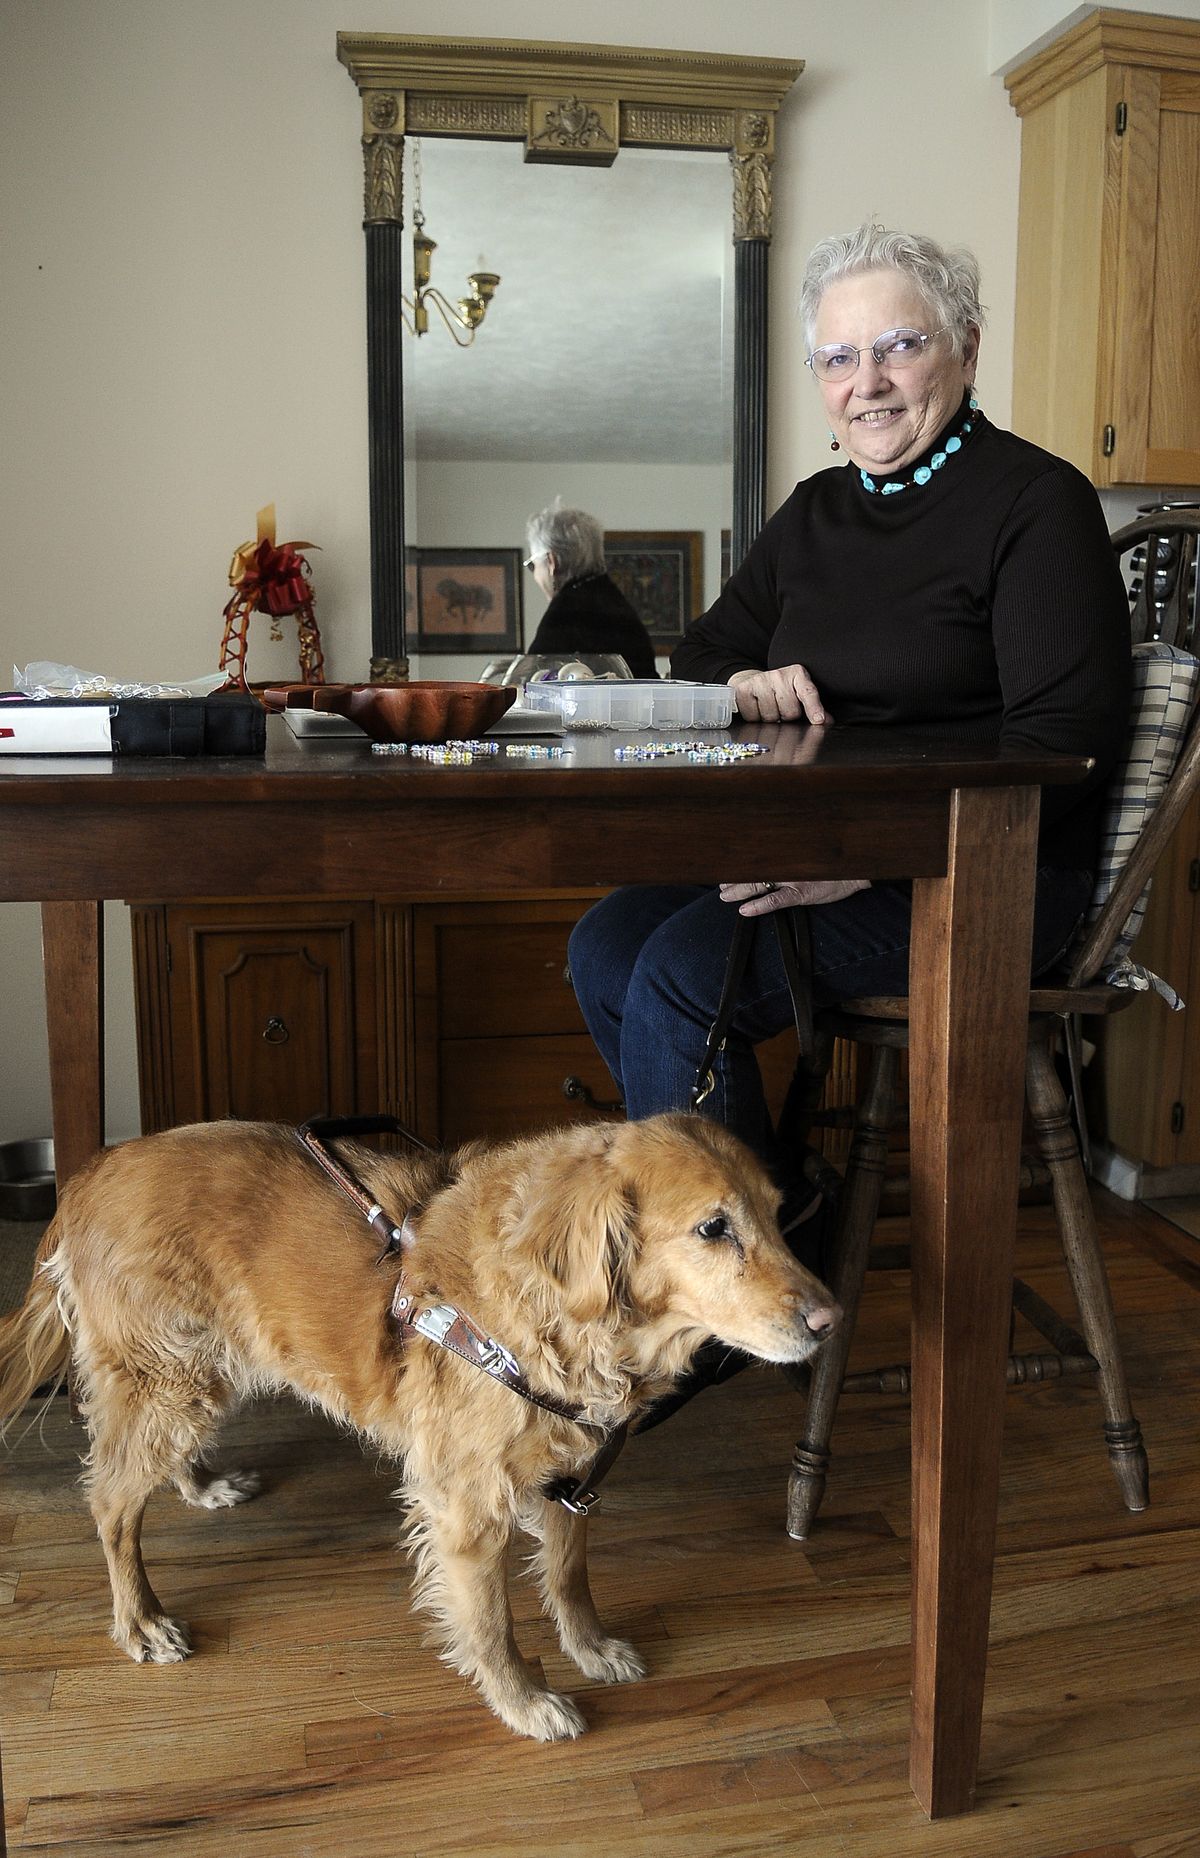 Katharine Surette, 69, makes jewelry in her home workshop near Sacred Heart Medical Center in Spokane. Surette, who is blind, uses a service dog named Julie.  (Dan Pelle / The Spokesman-Review)